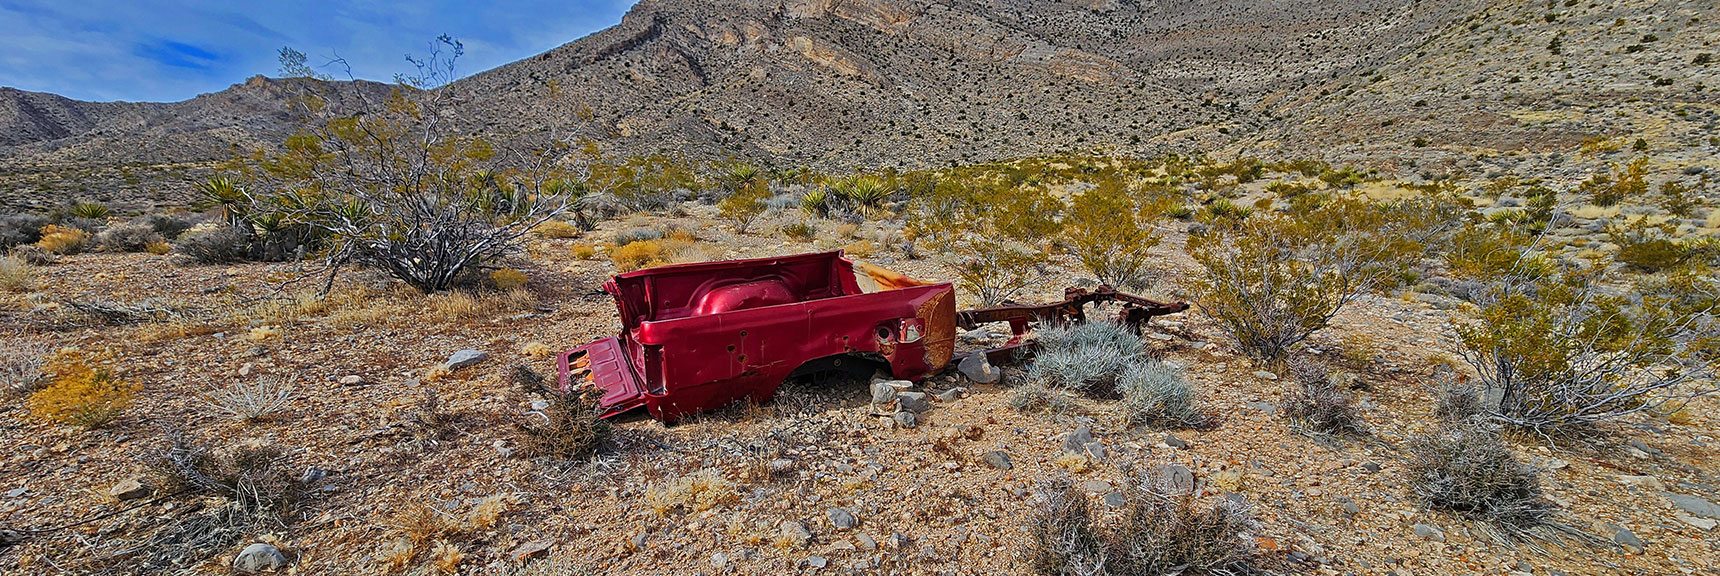 Toyota V6 That Didn't Make It. | Damsel Peak Southeastern Slope | Calico & Brownstone Basins, Nevada